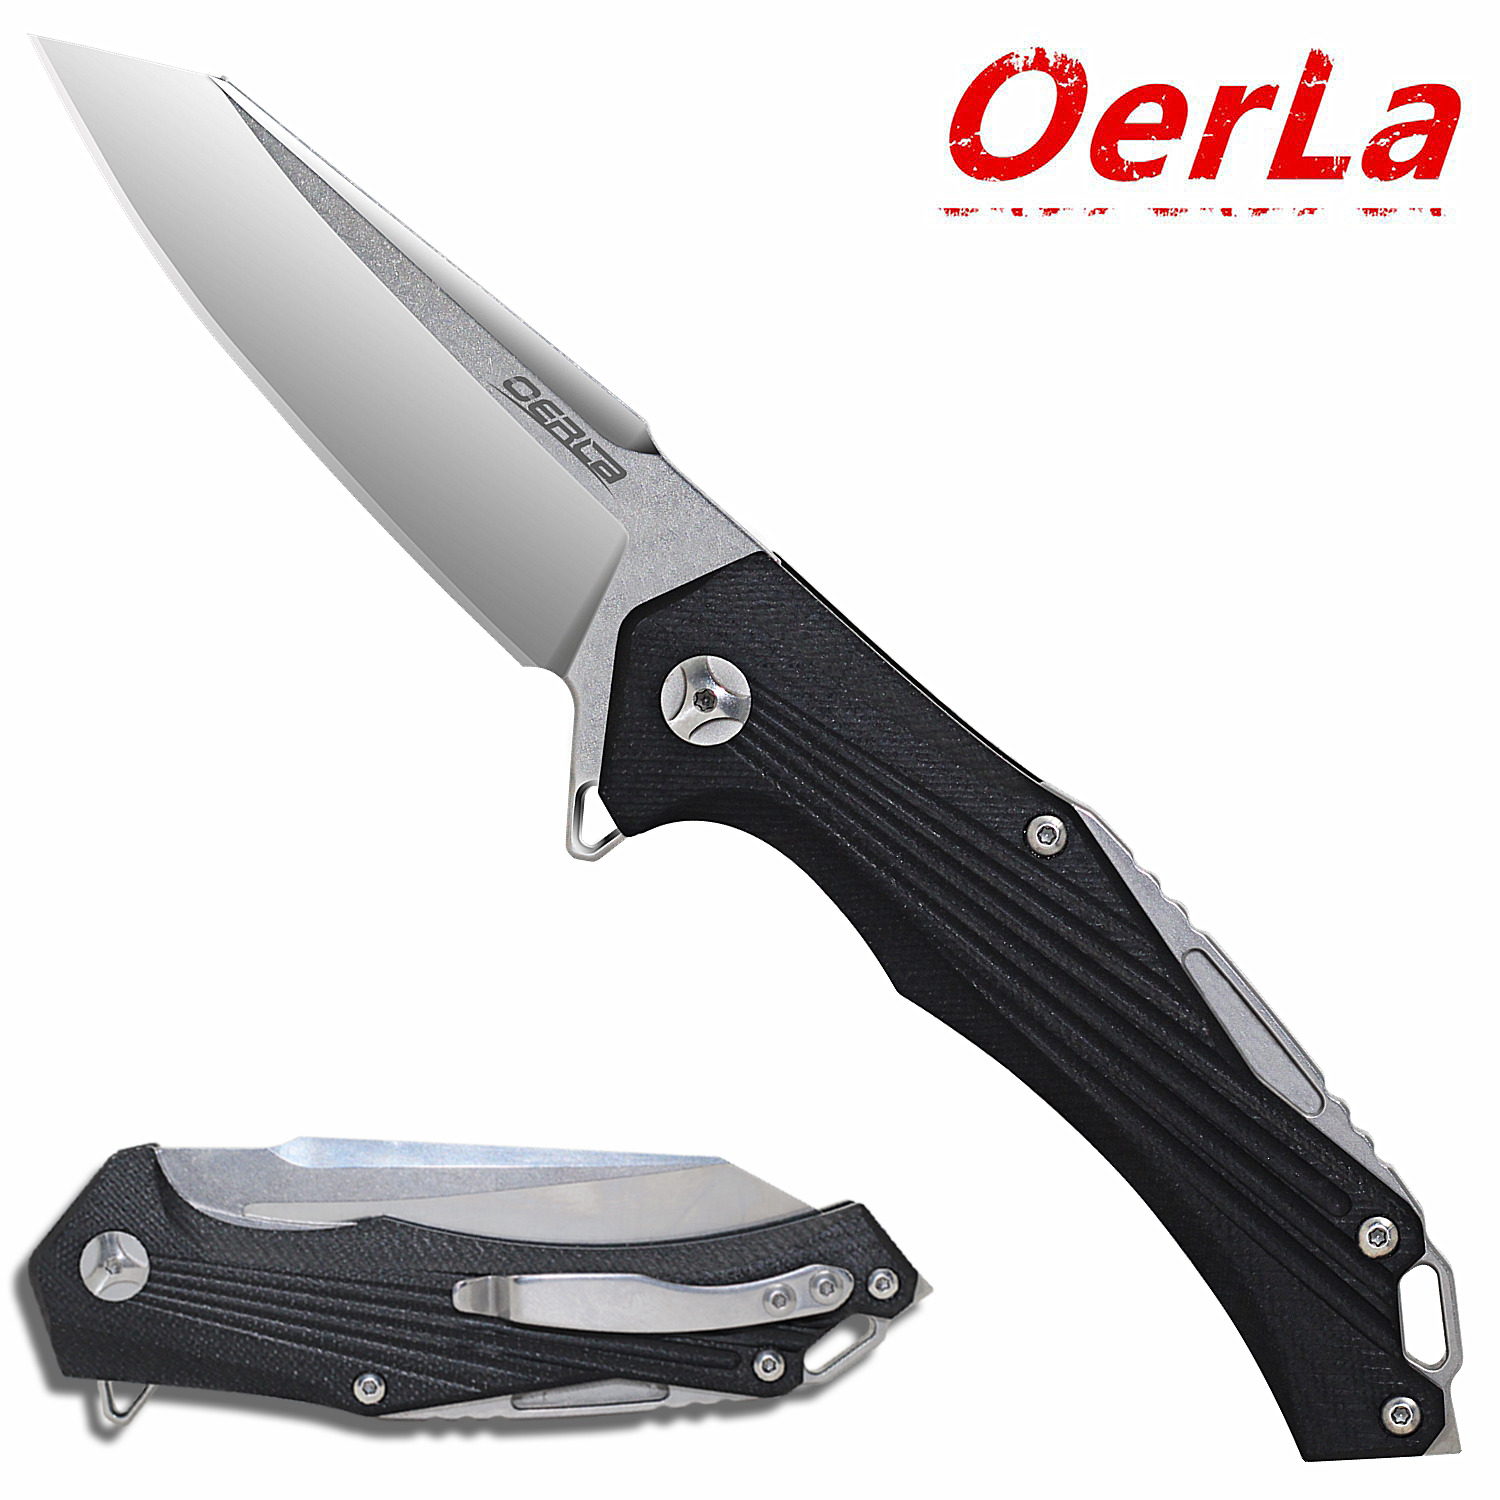 Oerla OL-0027 EDC Pocket Folding knife 420HC Ball bearing System Flipper knives